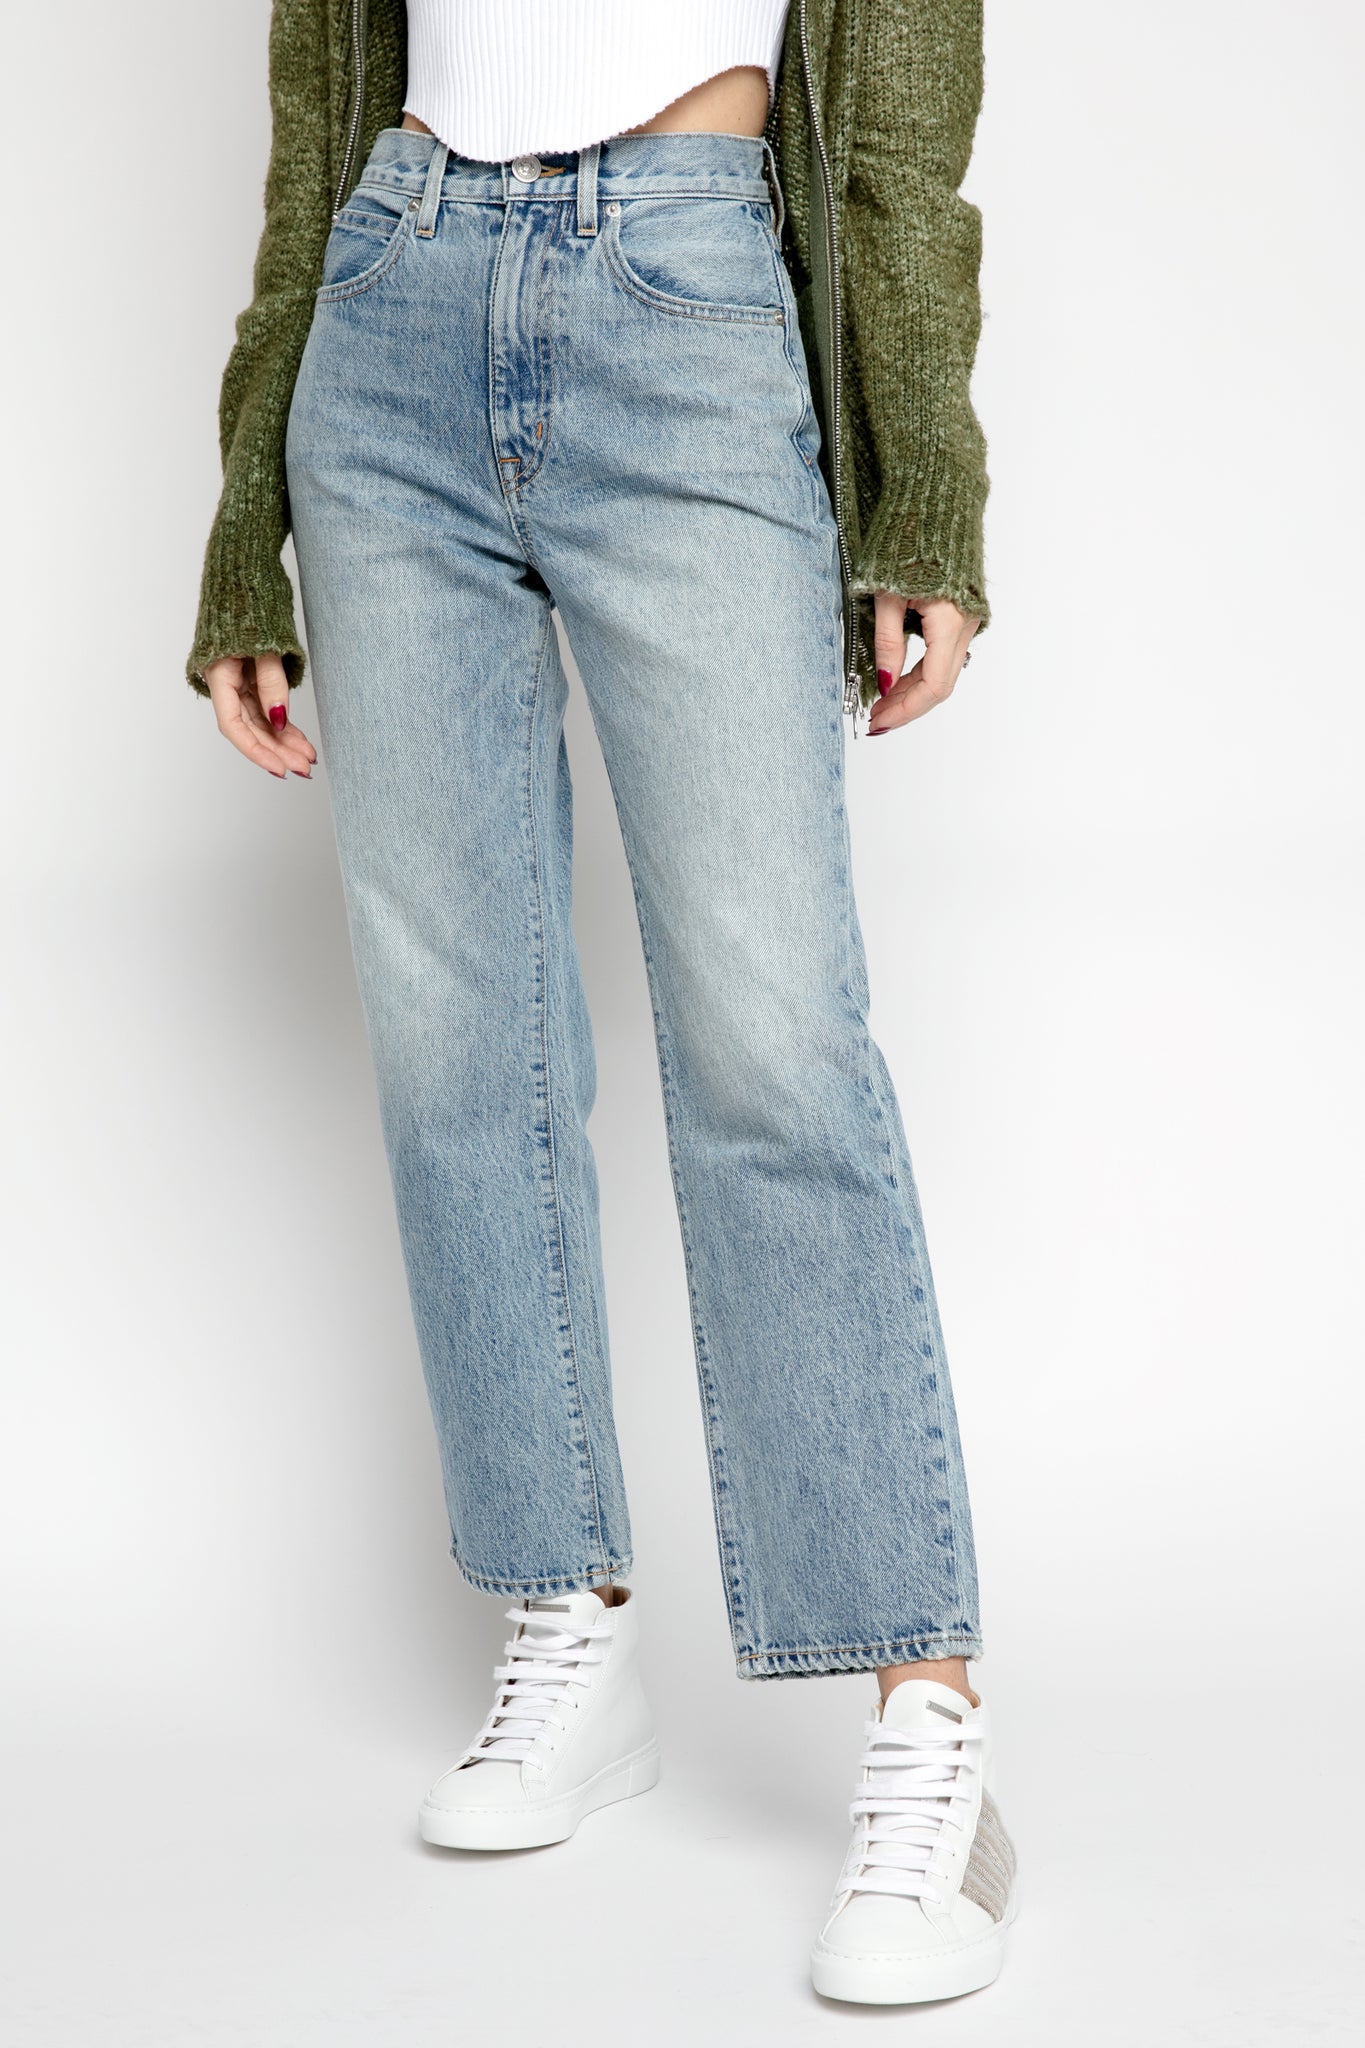 Buy London Crop Jean in Wild Thing | SLVRLAKE - T. Boutique